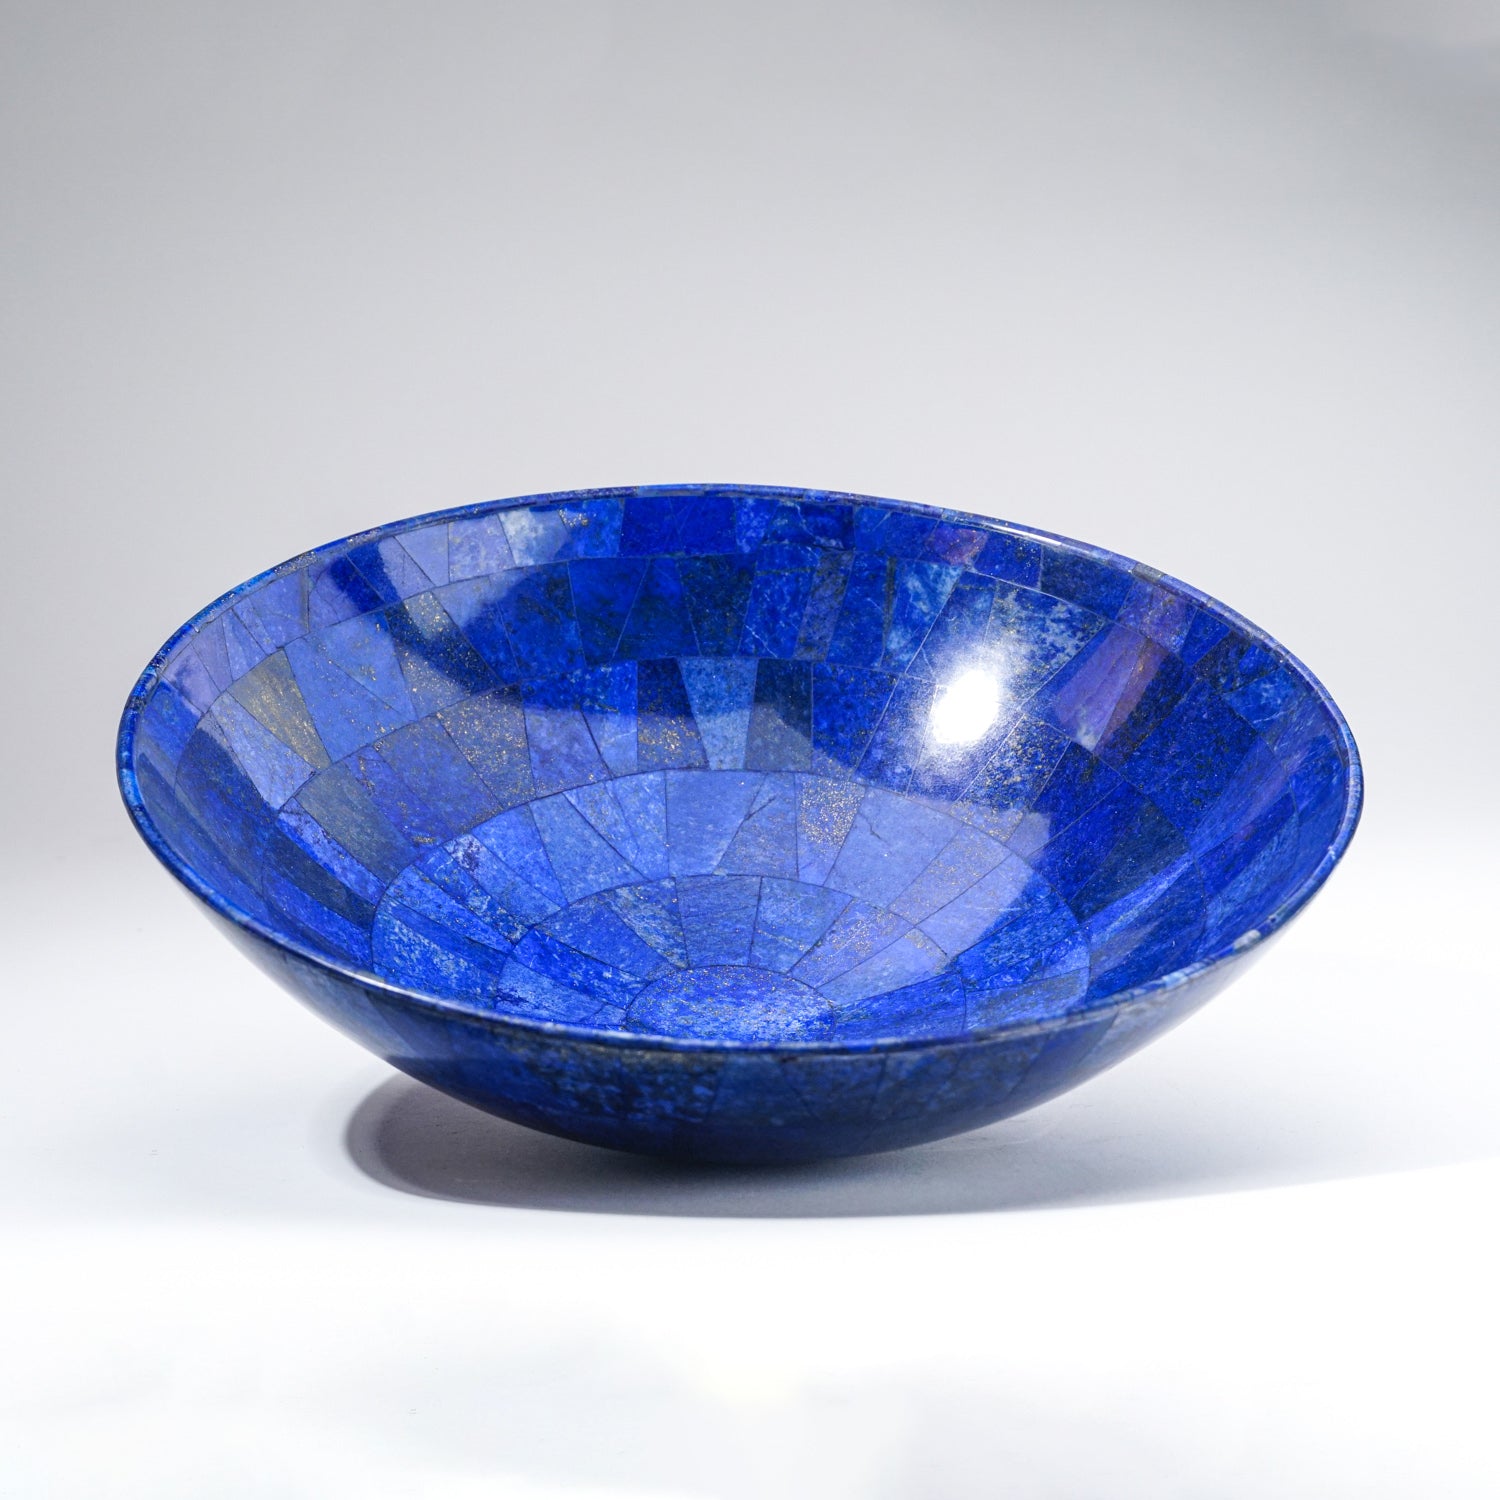 Genuine Polished Lapis Lazuli Bowl (3.6 lbs)